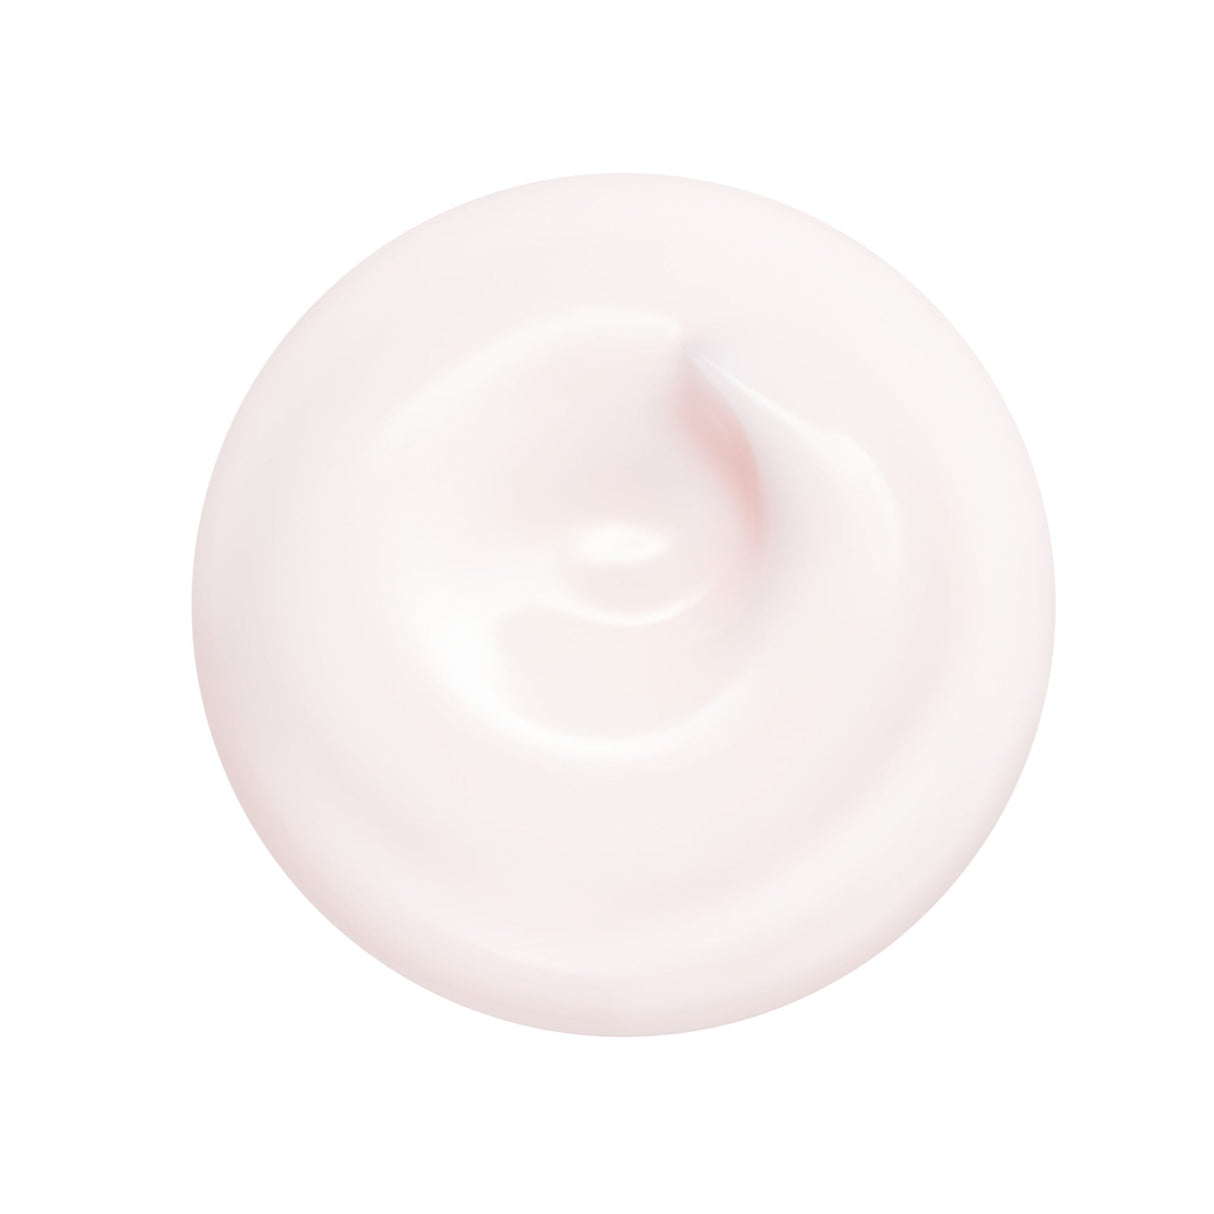 Essential Energy Hydrating Cream-Shiseido